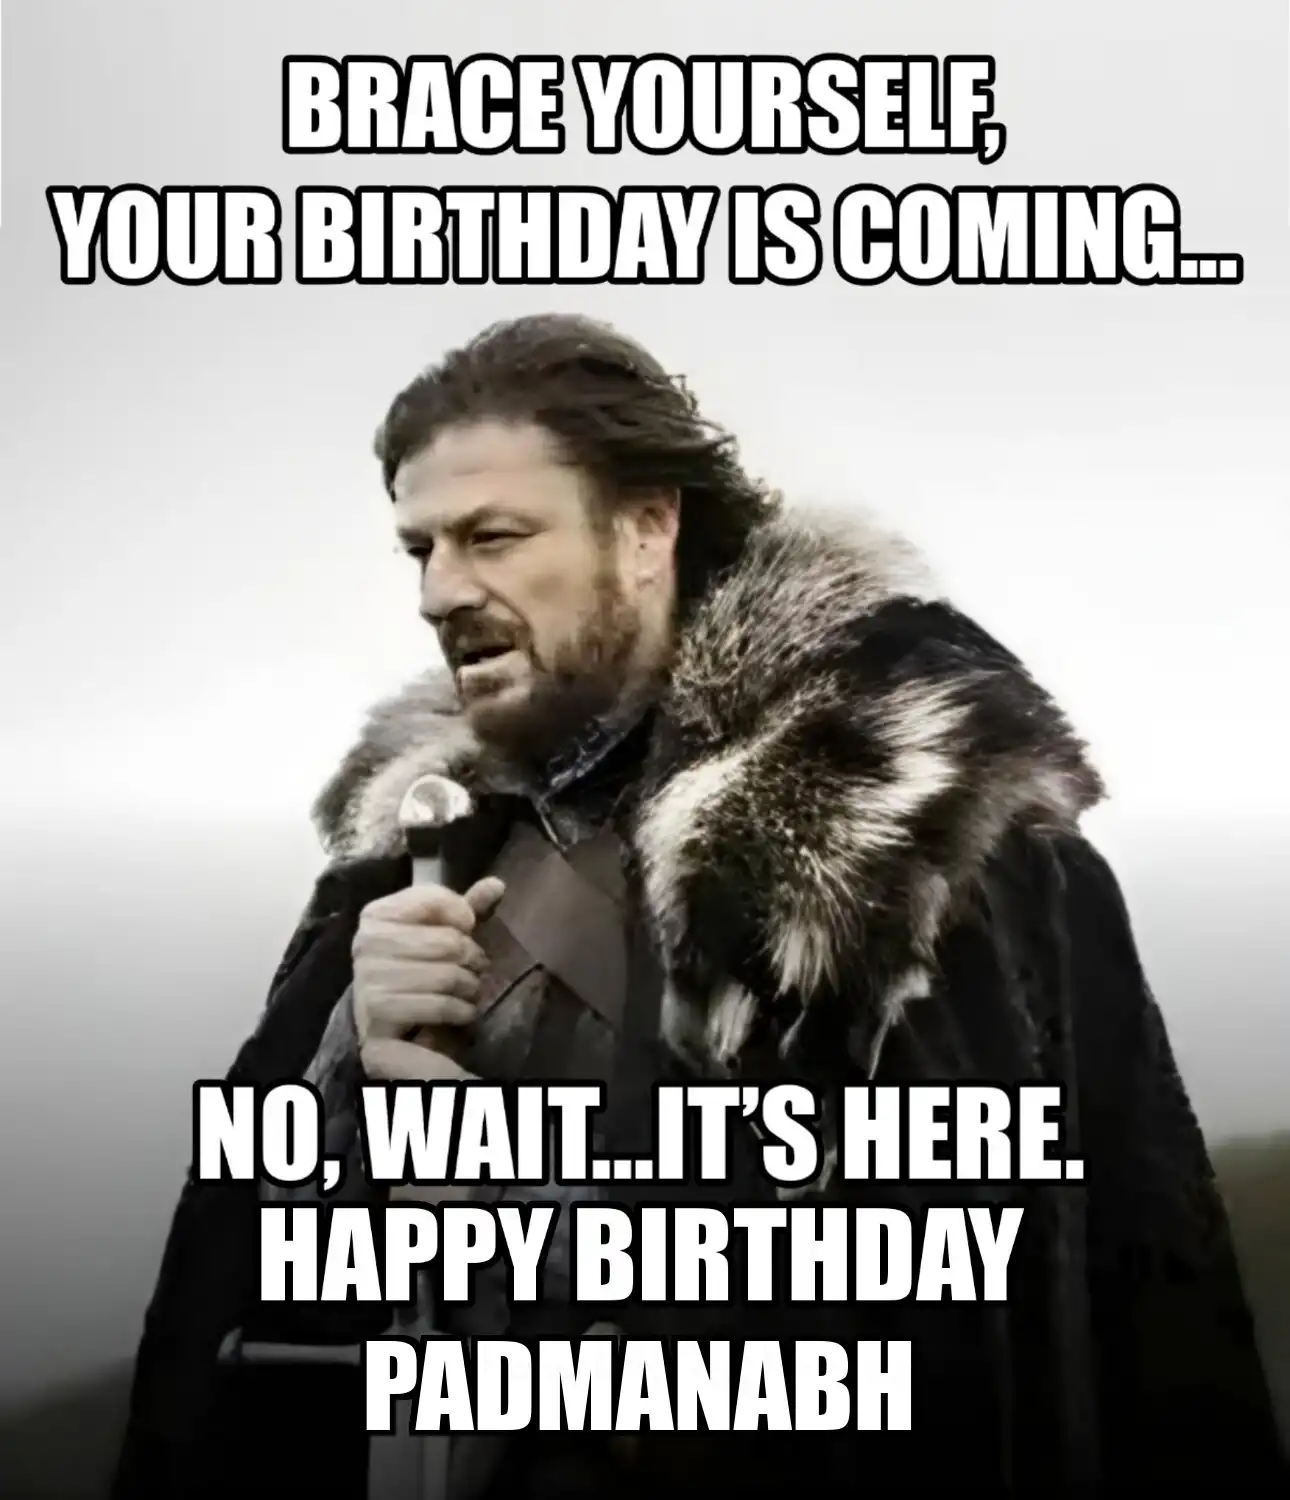 Happy Birthday Padmanabh Brace Yourself Your Birthday Is Coming Meme